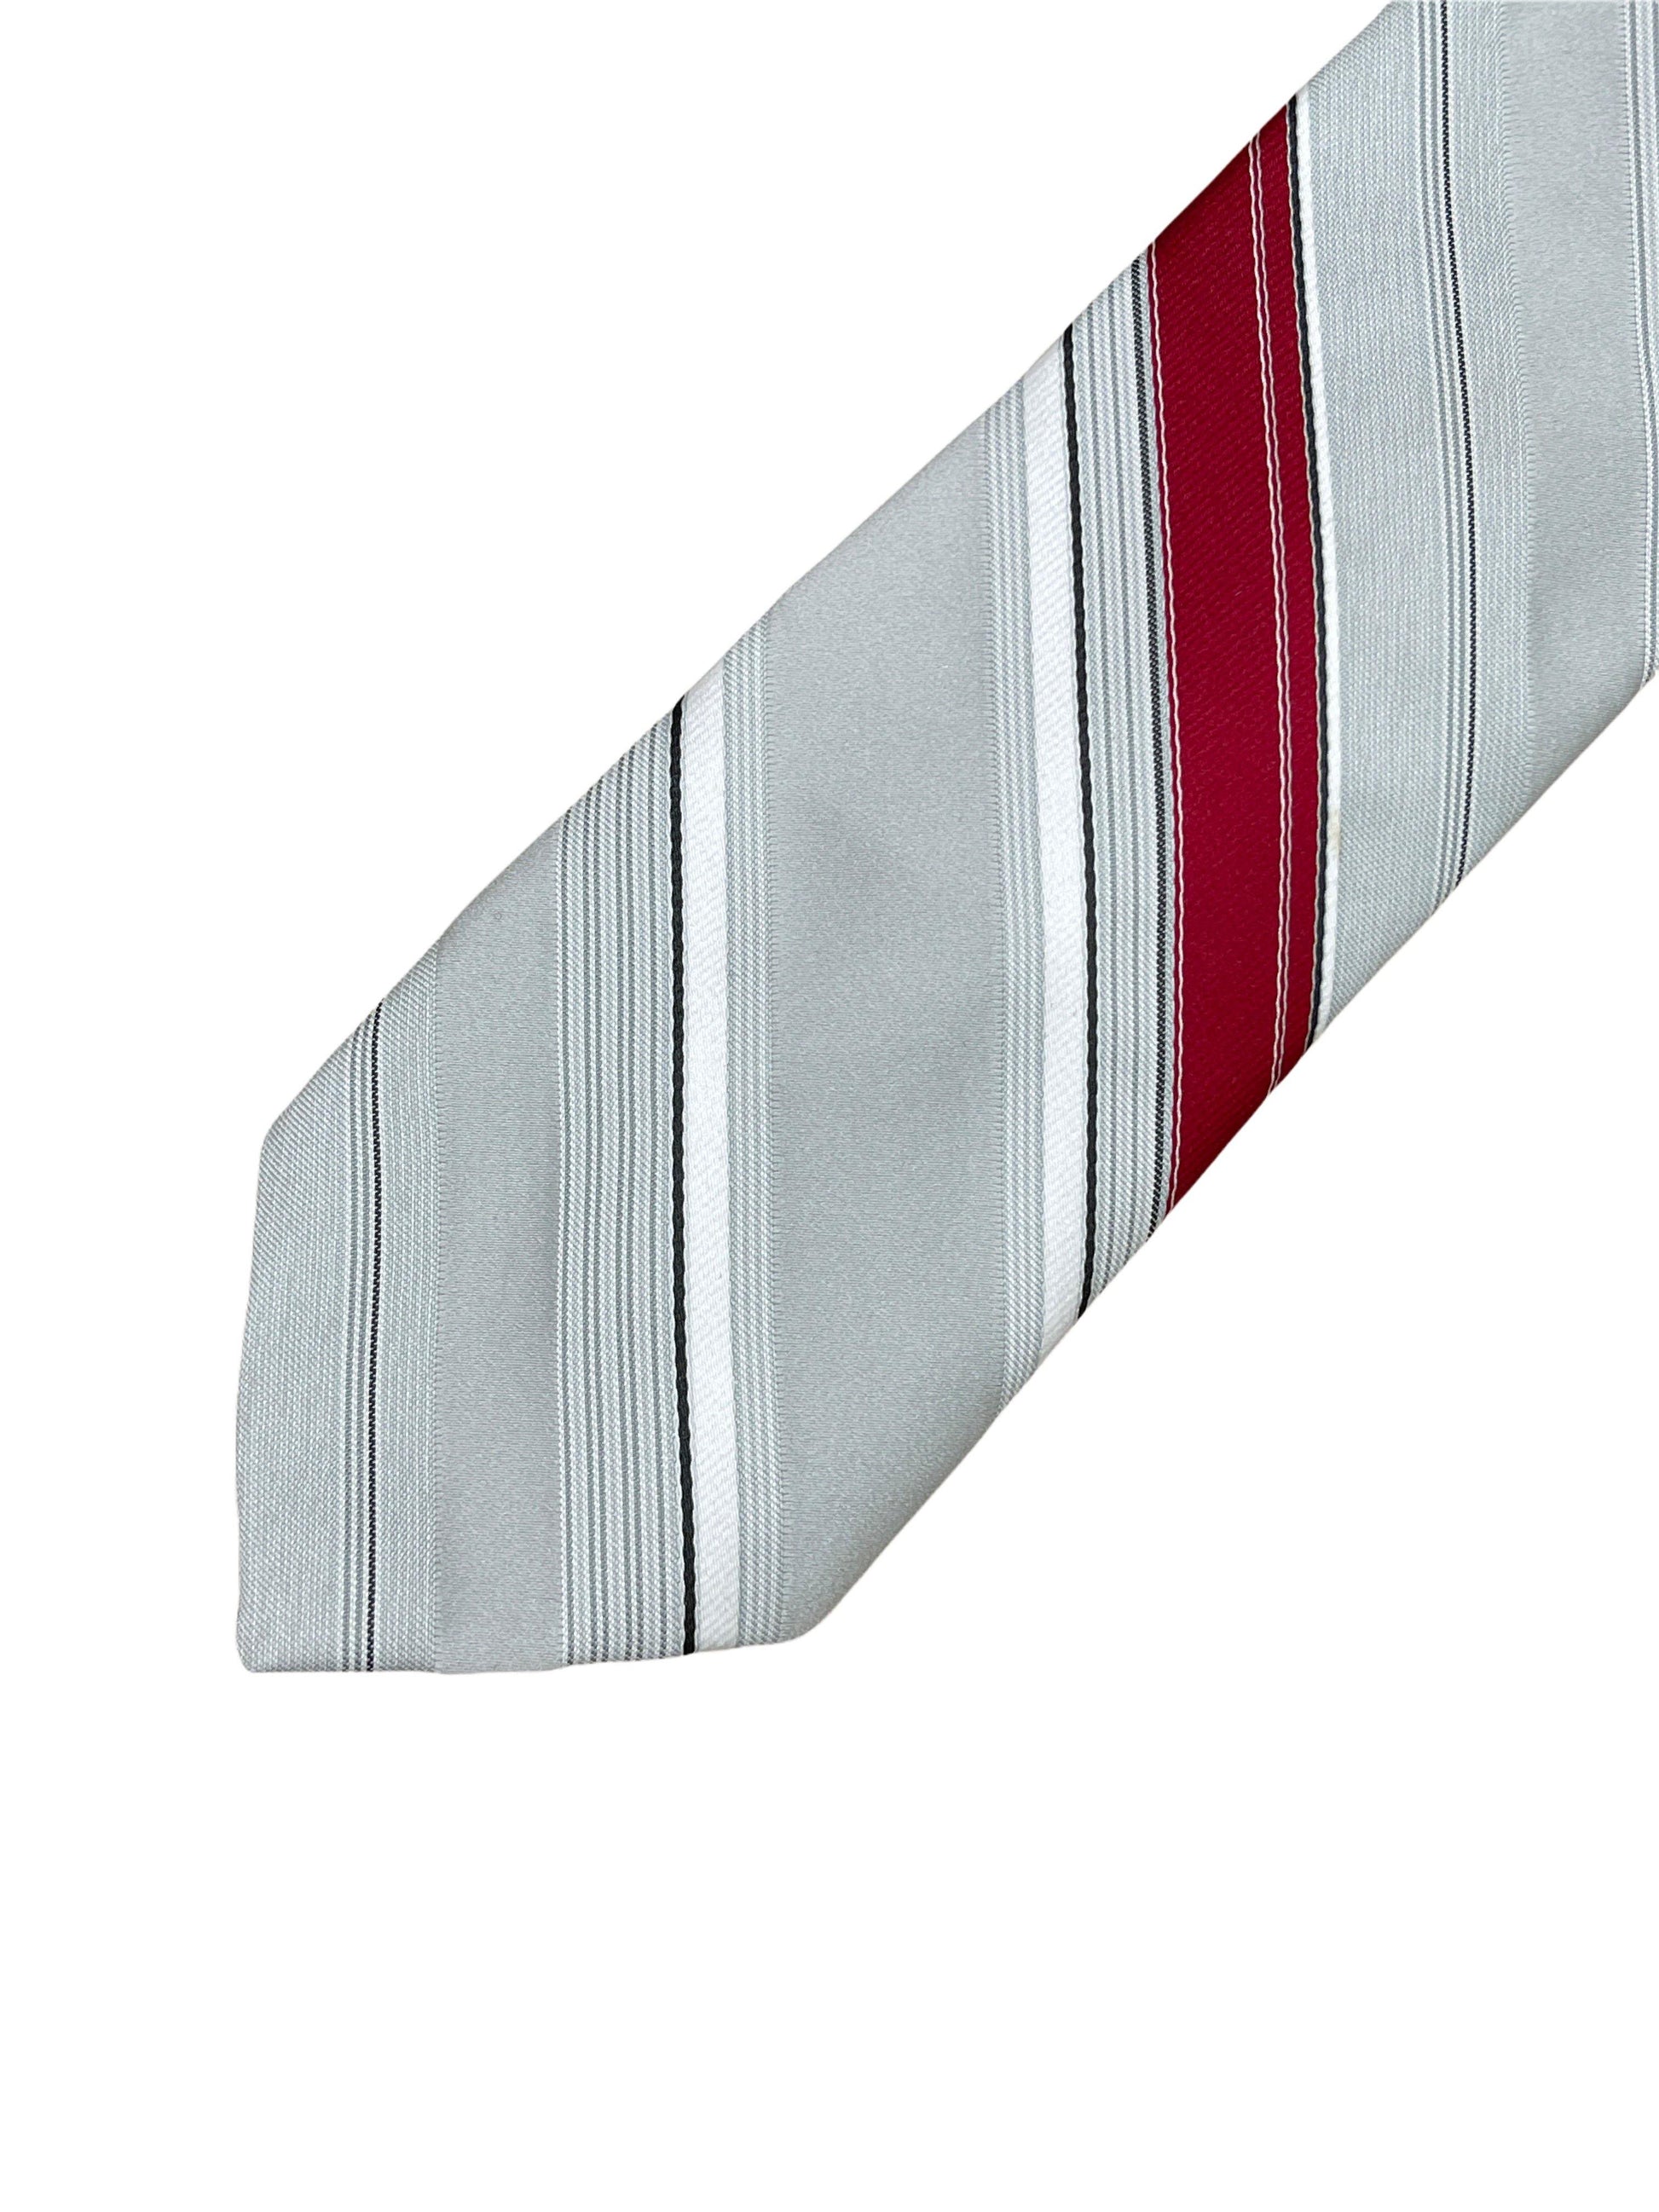 Chrisitian dior silver striped tie